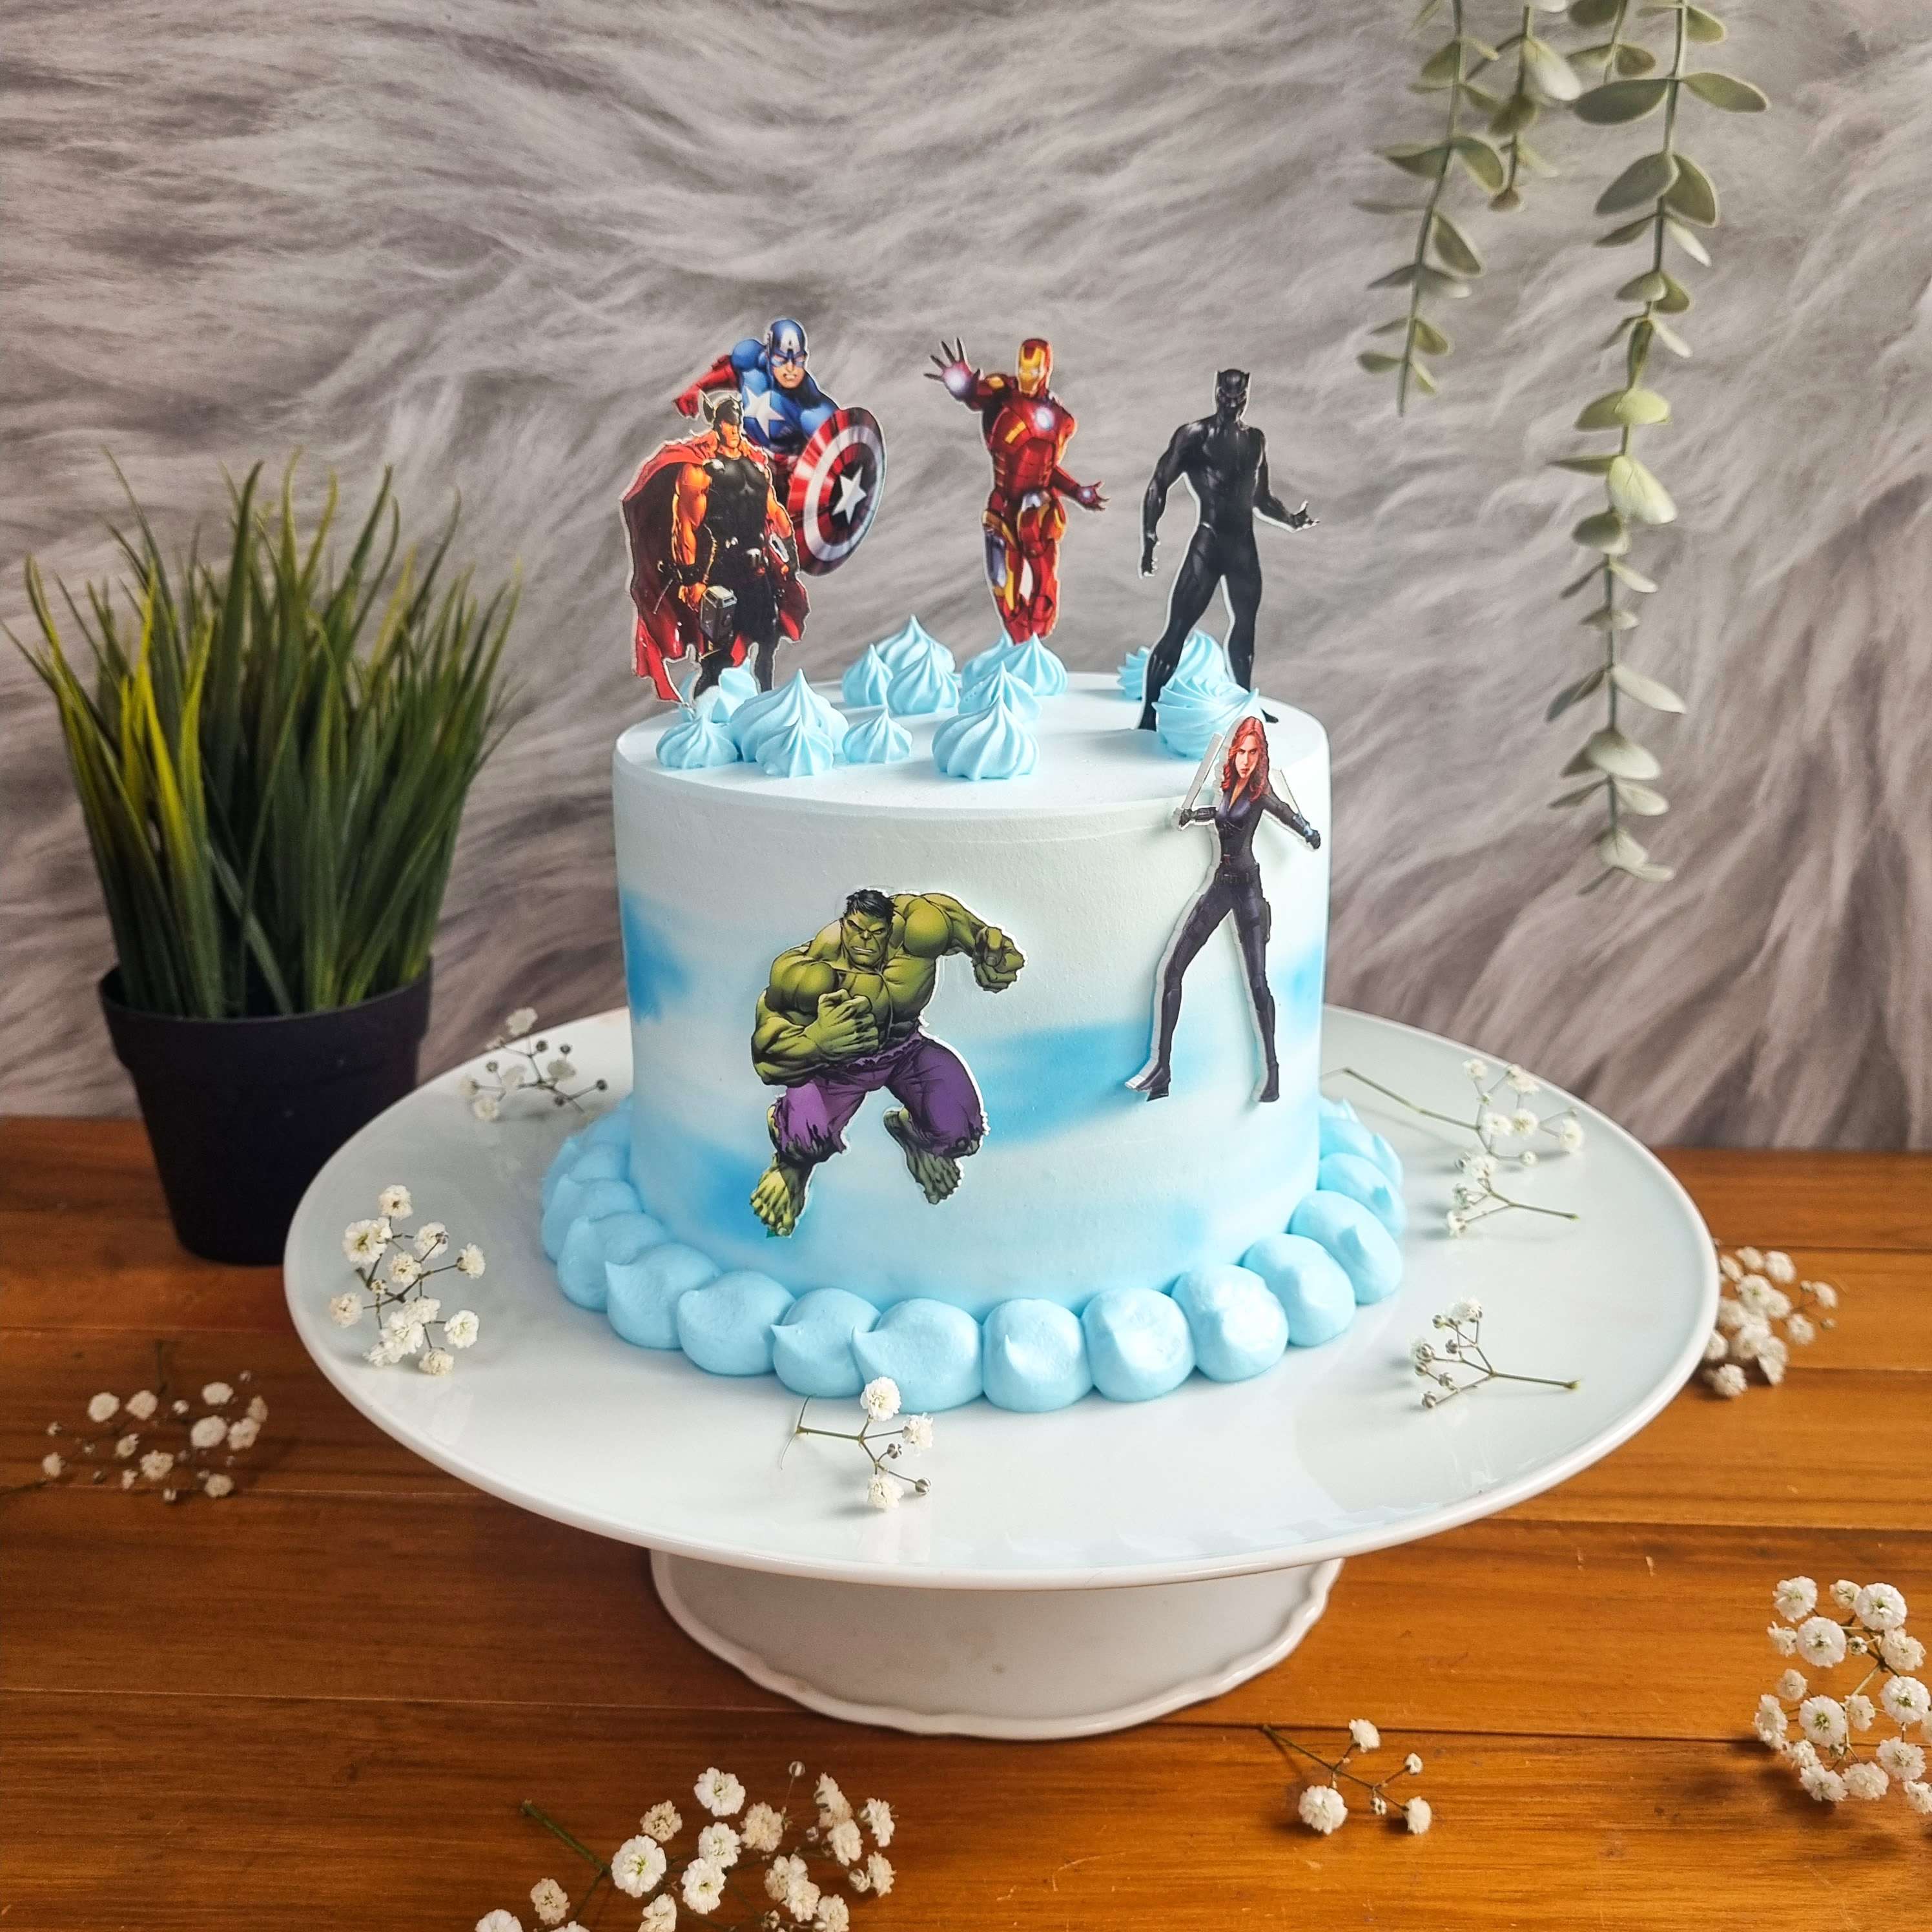 Avenger's Birthday Cake - Decorated Cake by Kristi - CakesDecor